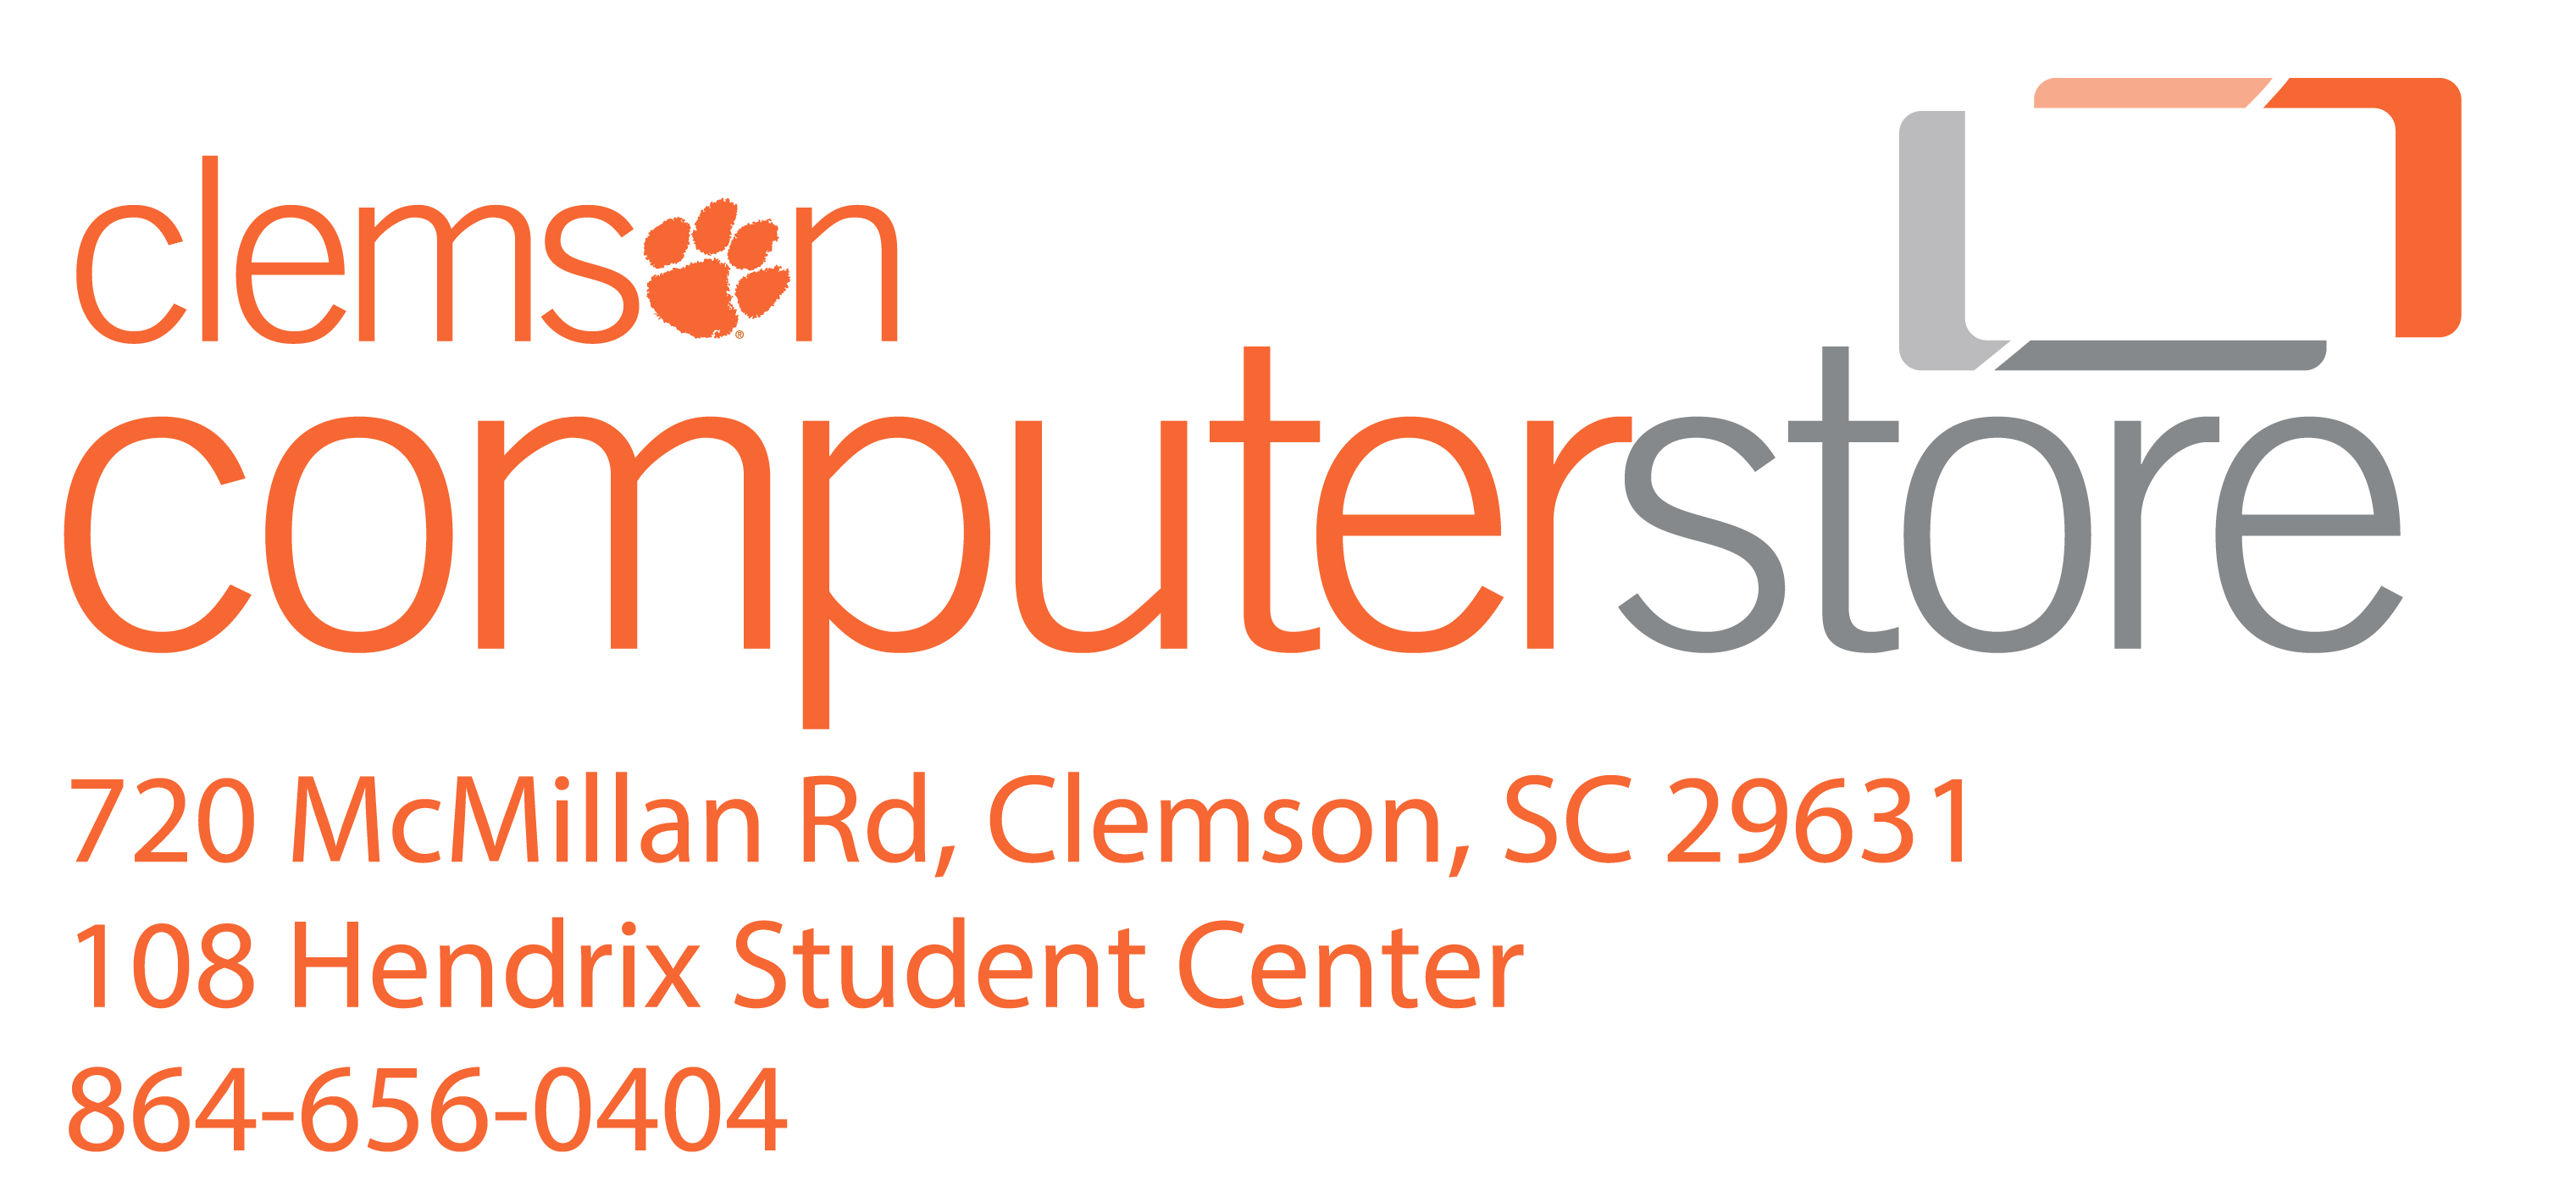 Clemson Computer Store